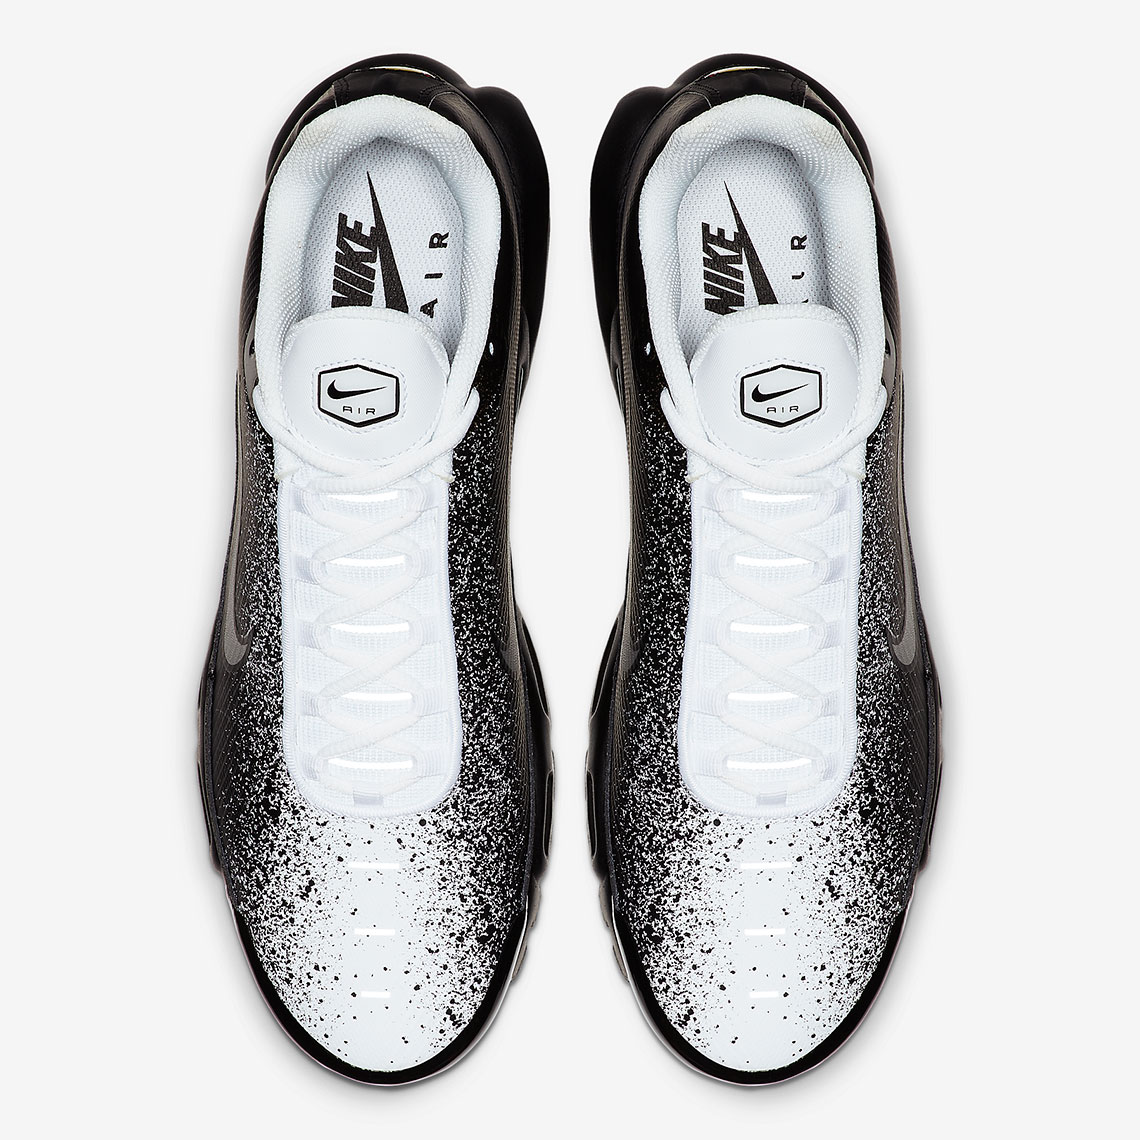 Lijm bijtend Versterken Nike Air Max Plus Spray Black CI7701 002 Release Info | SneakerNews.com